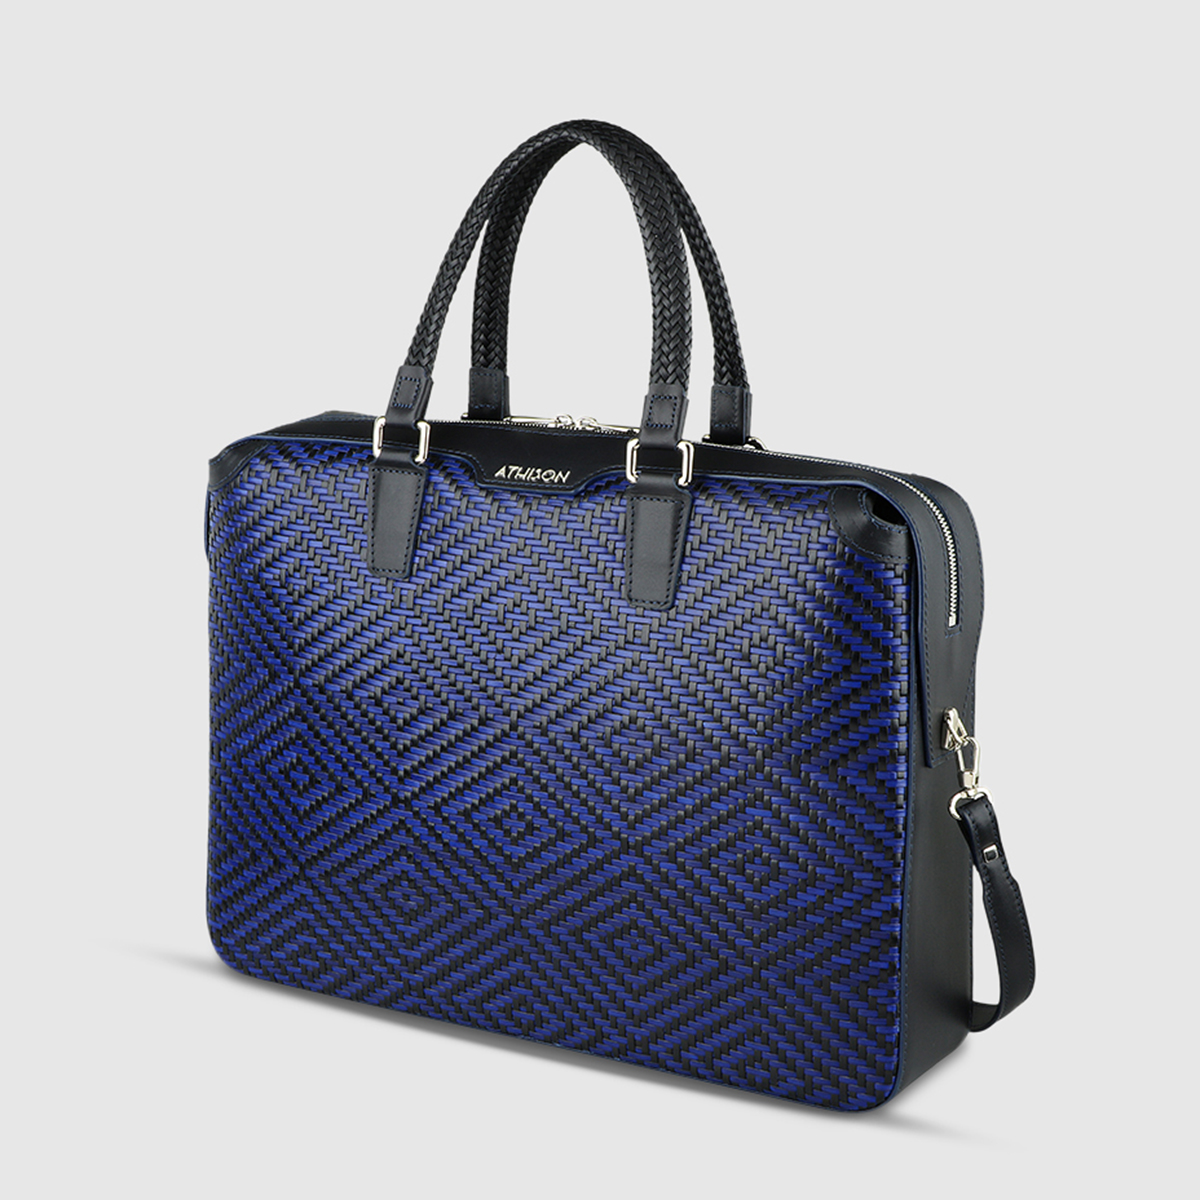 Athison Blue/Black Leather Bag